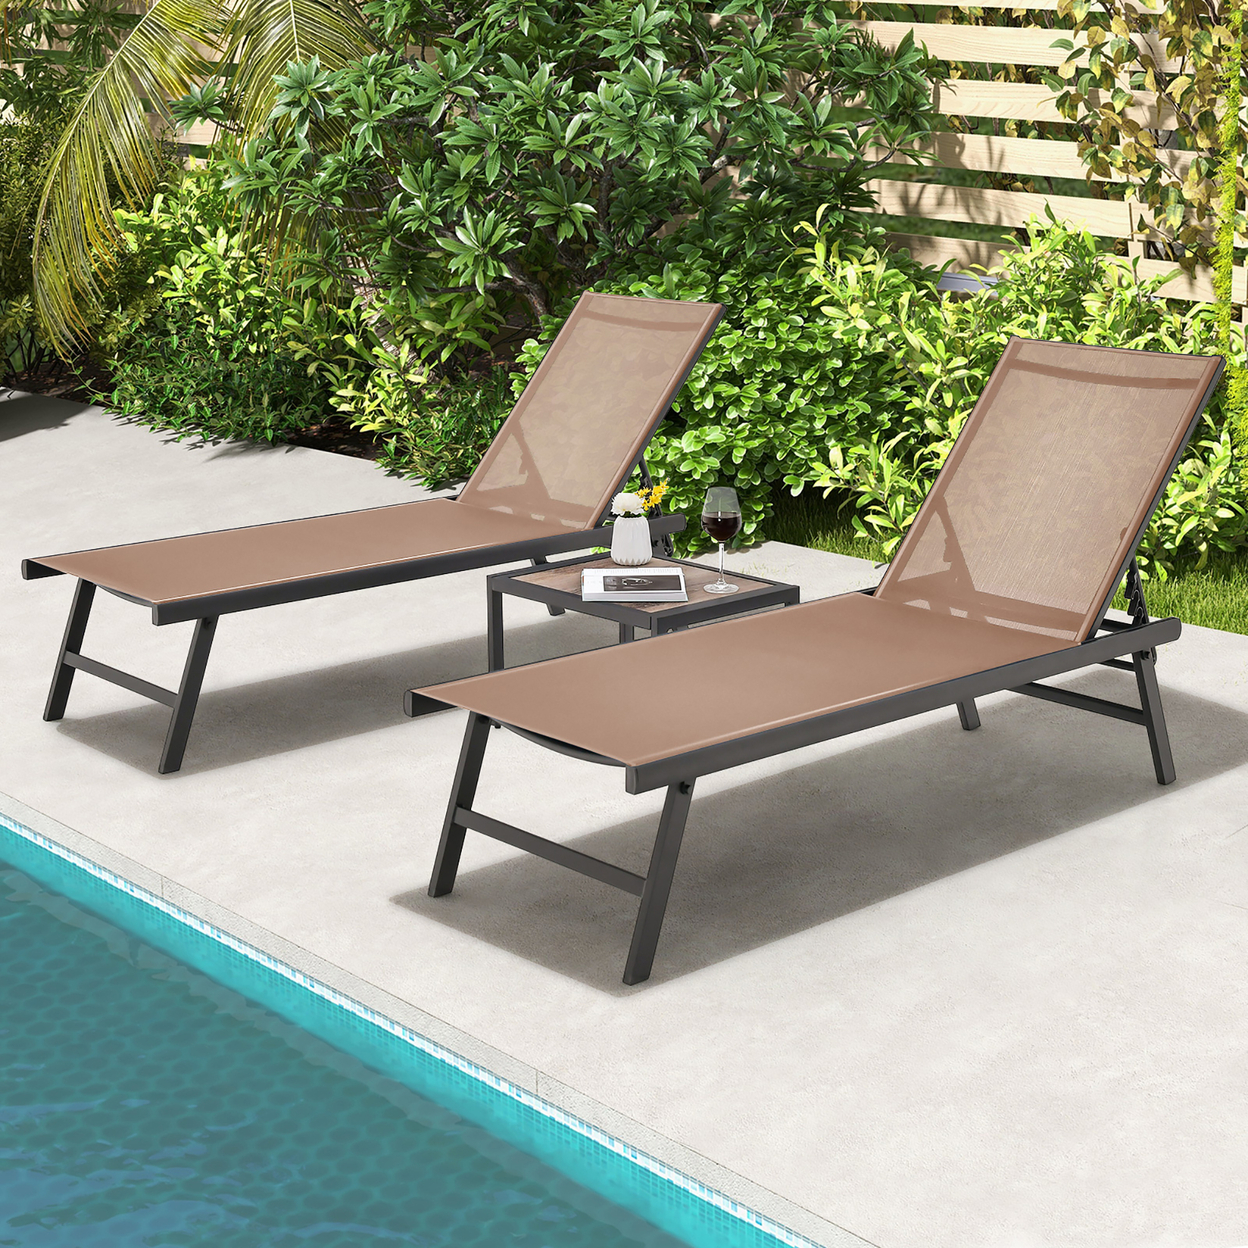 3pcs Patio Chaise Lounge Set Aluminum Recliner Chair Table Outdoor Adjust - Tan